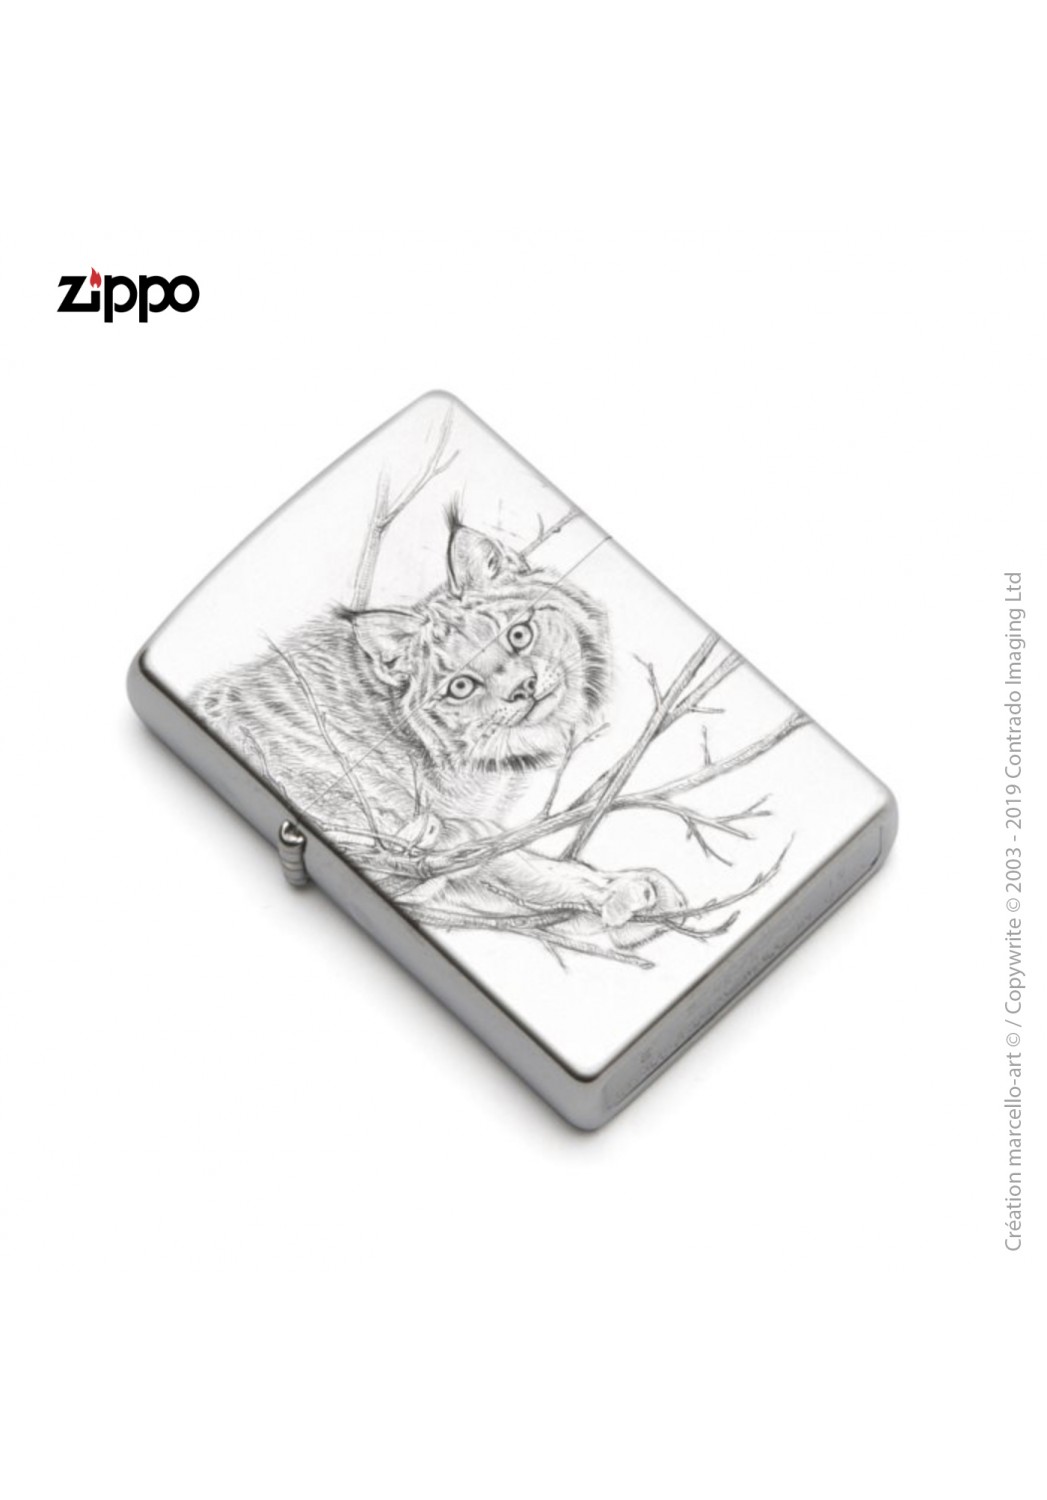 Marcello-art: Decoration accessoiries Zippo 393 lynx